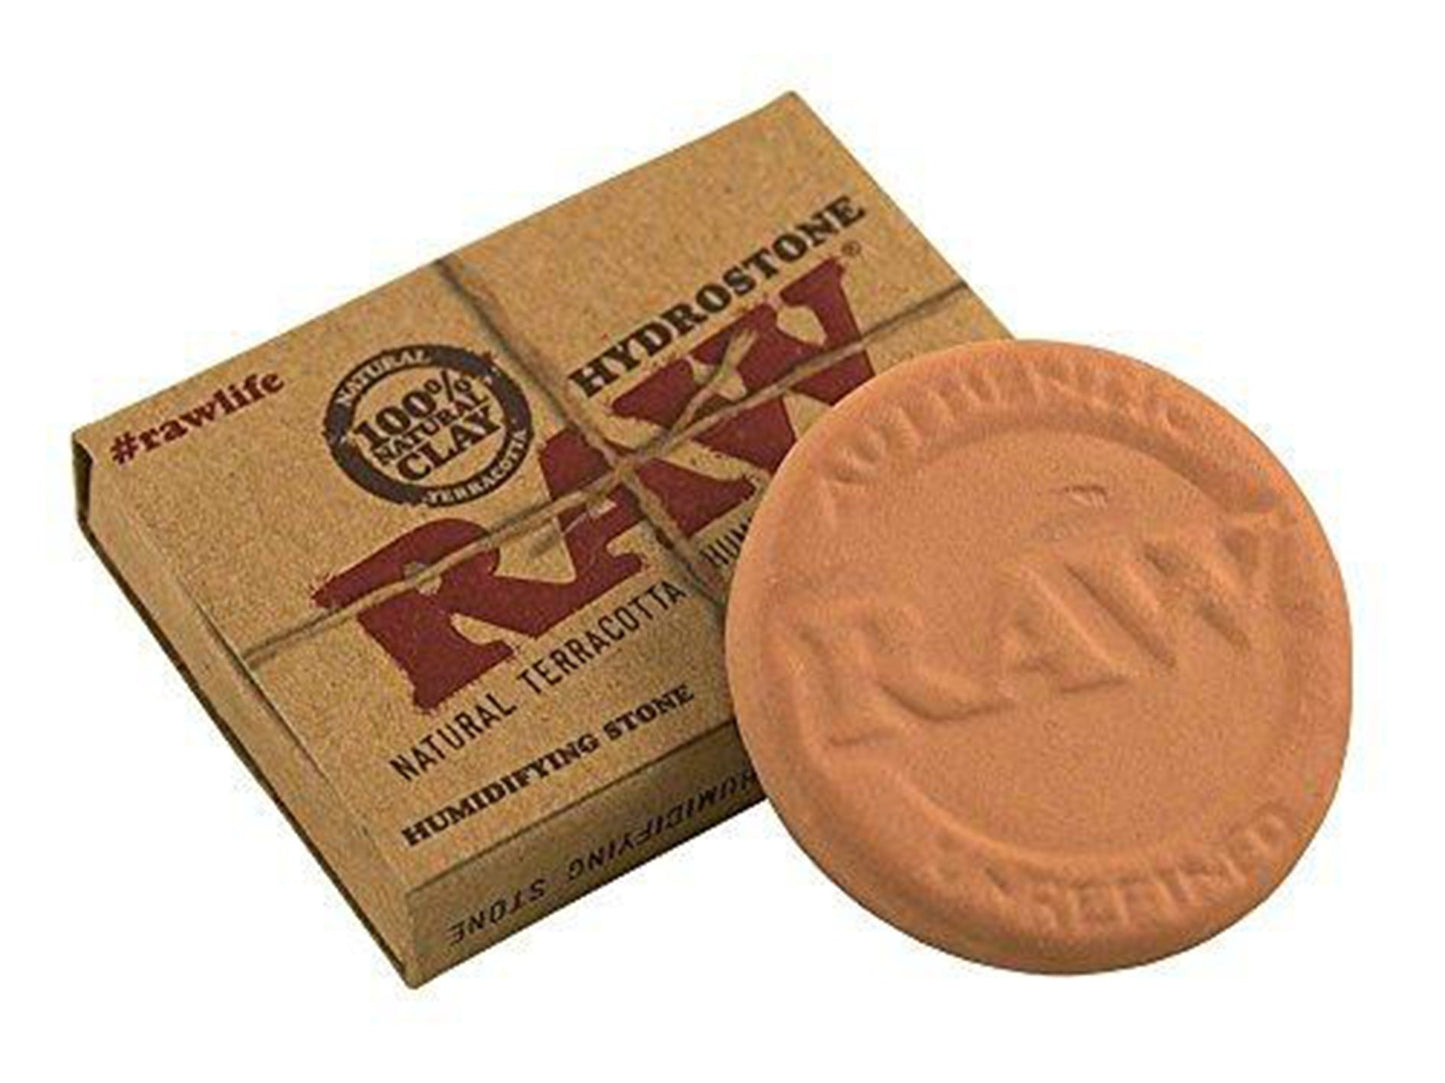 RAW Brand Terracotta Humidifying Hydrostone Tobacco Moisture Clay Stone (New Product From RAW) - 1 Hydrostone - VIR Wholesale